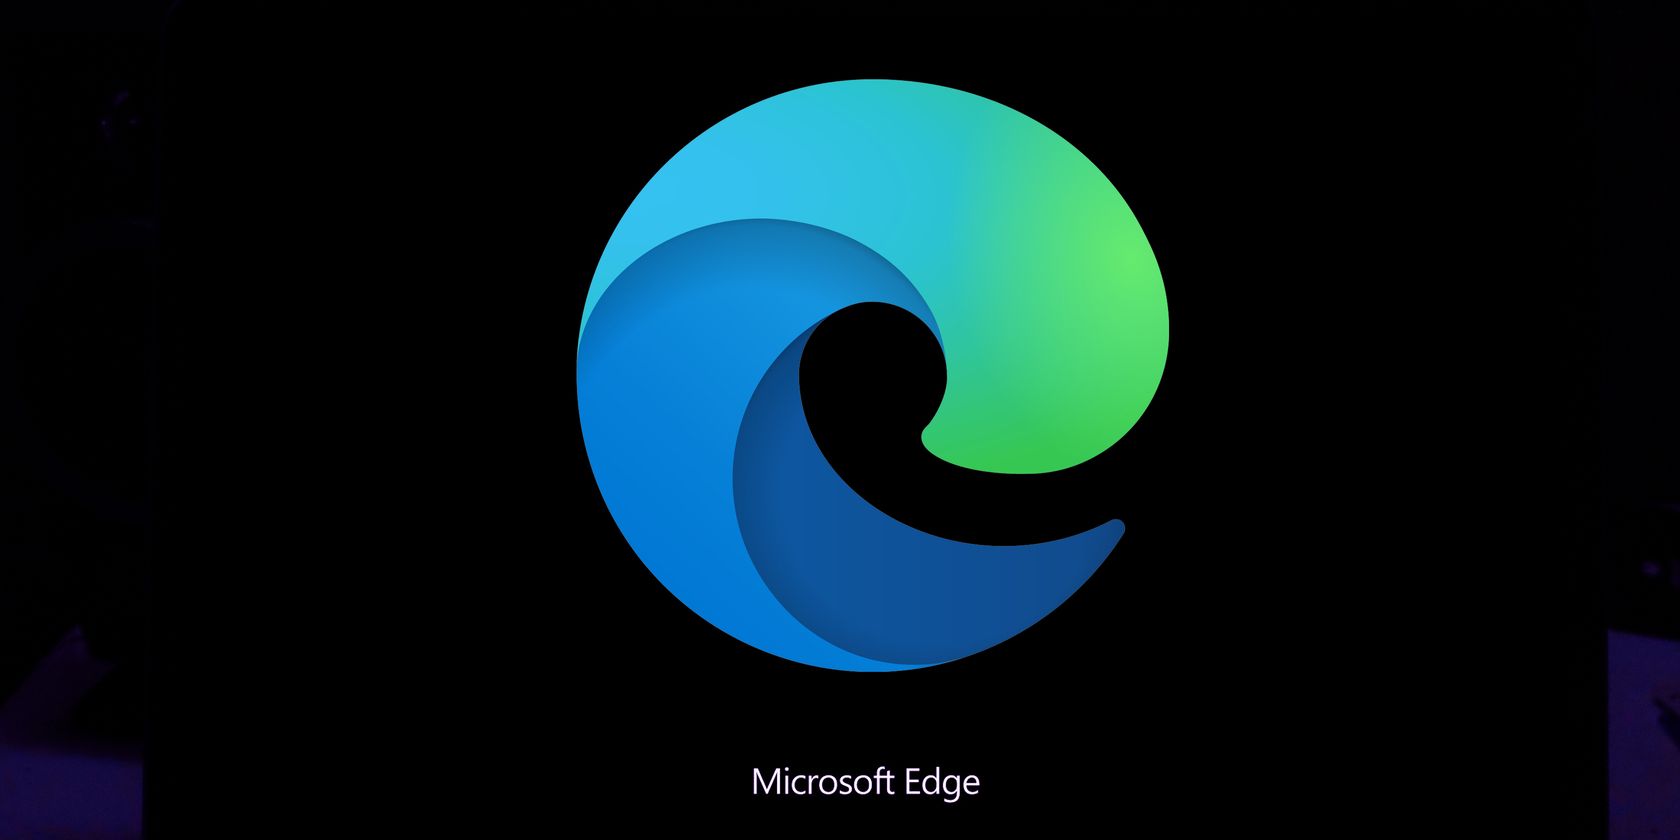 A laptop showing the Microsoft Edge logo